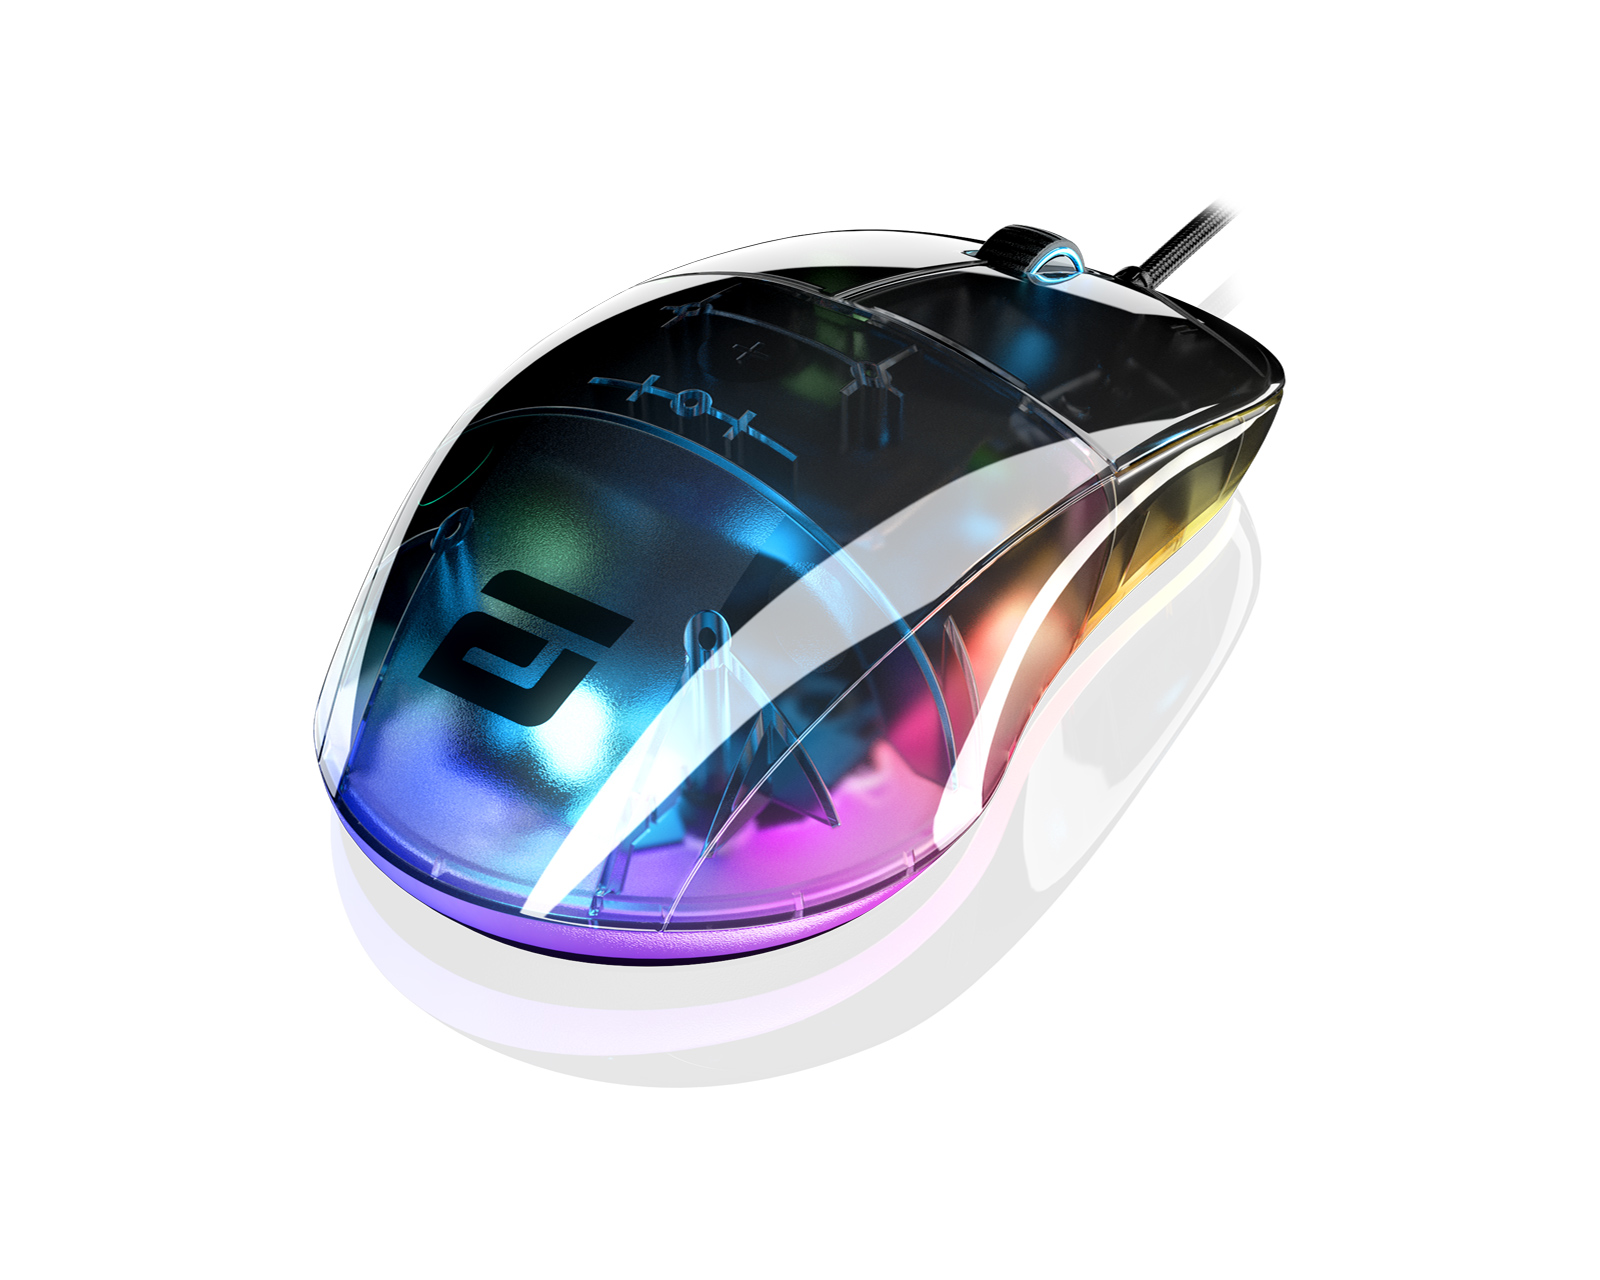 Buy Endgame Gear Xm1 Rgb Gaming Mouse Dark Reflex At Maxgaming Com